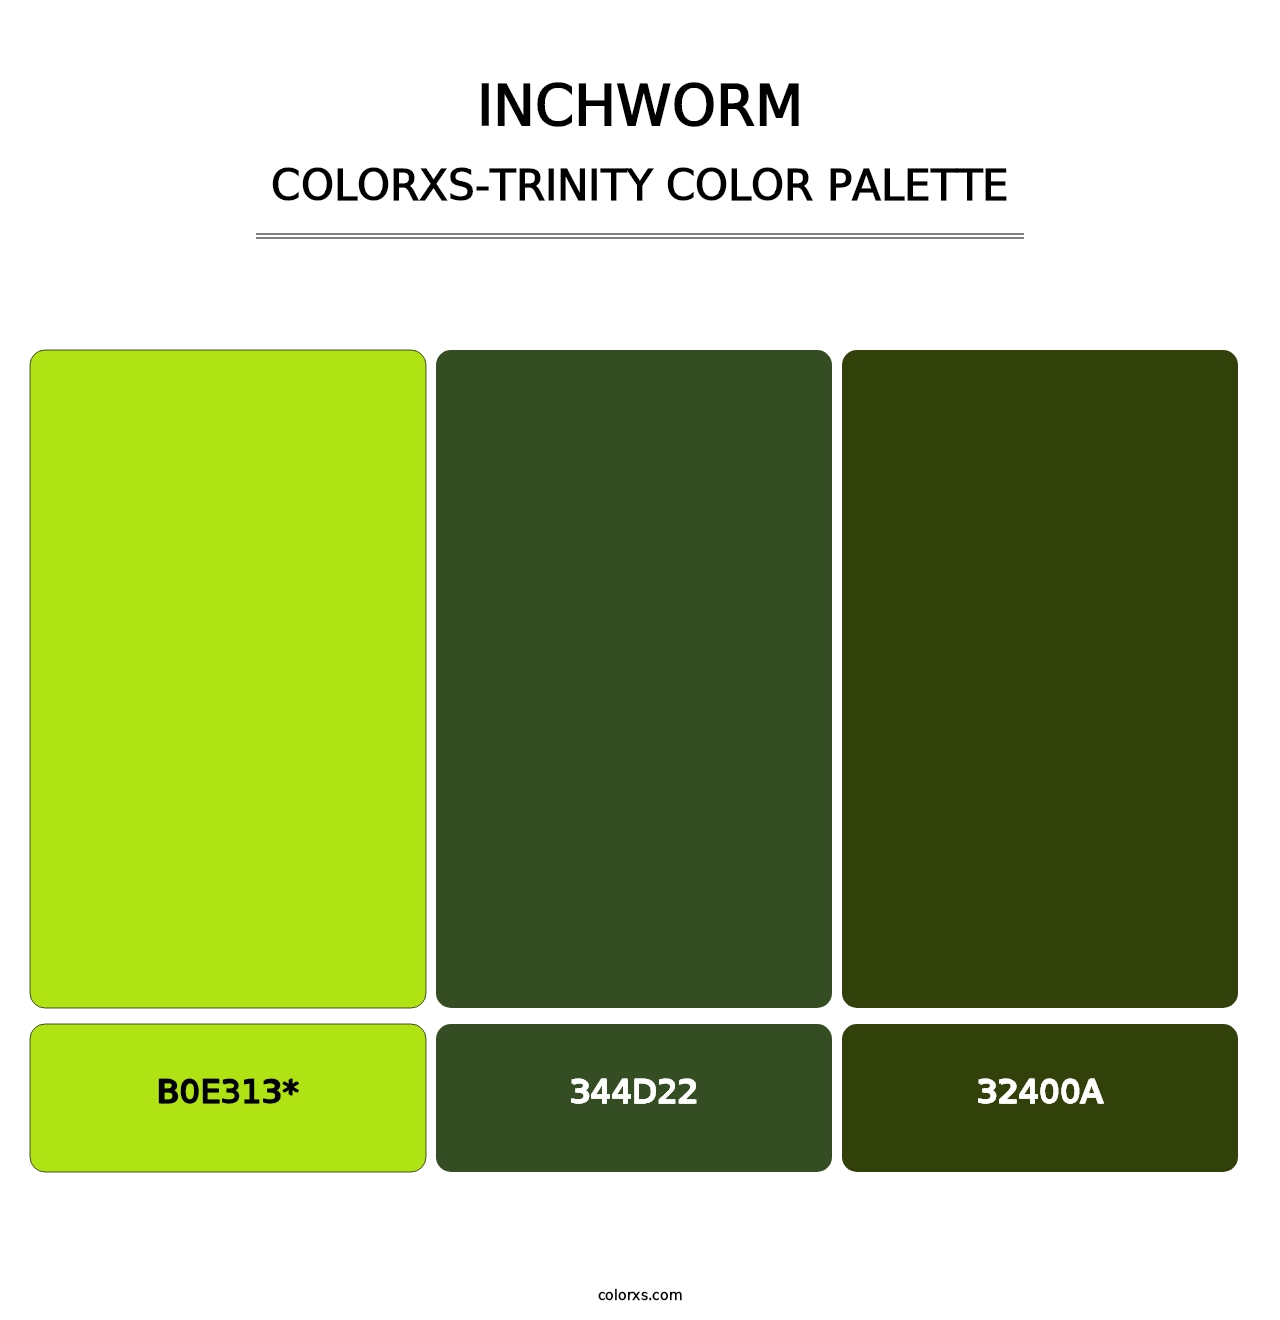 Inchworm - Colorxs Trinity Palette